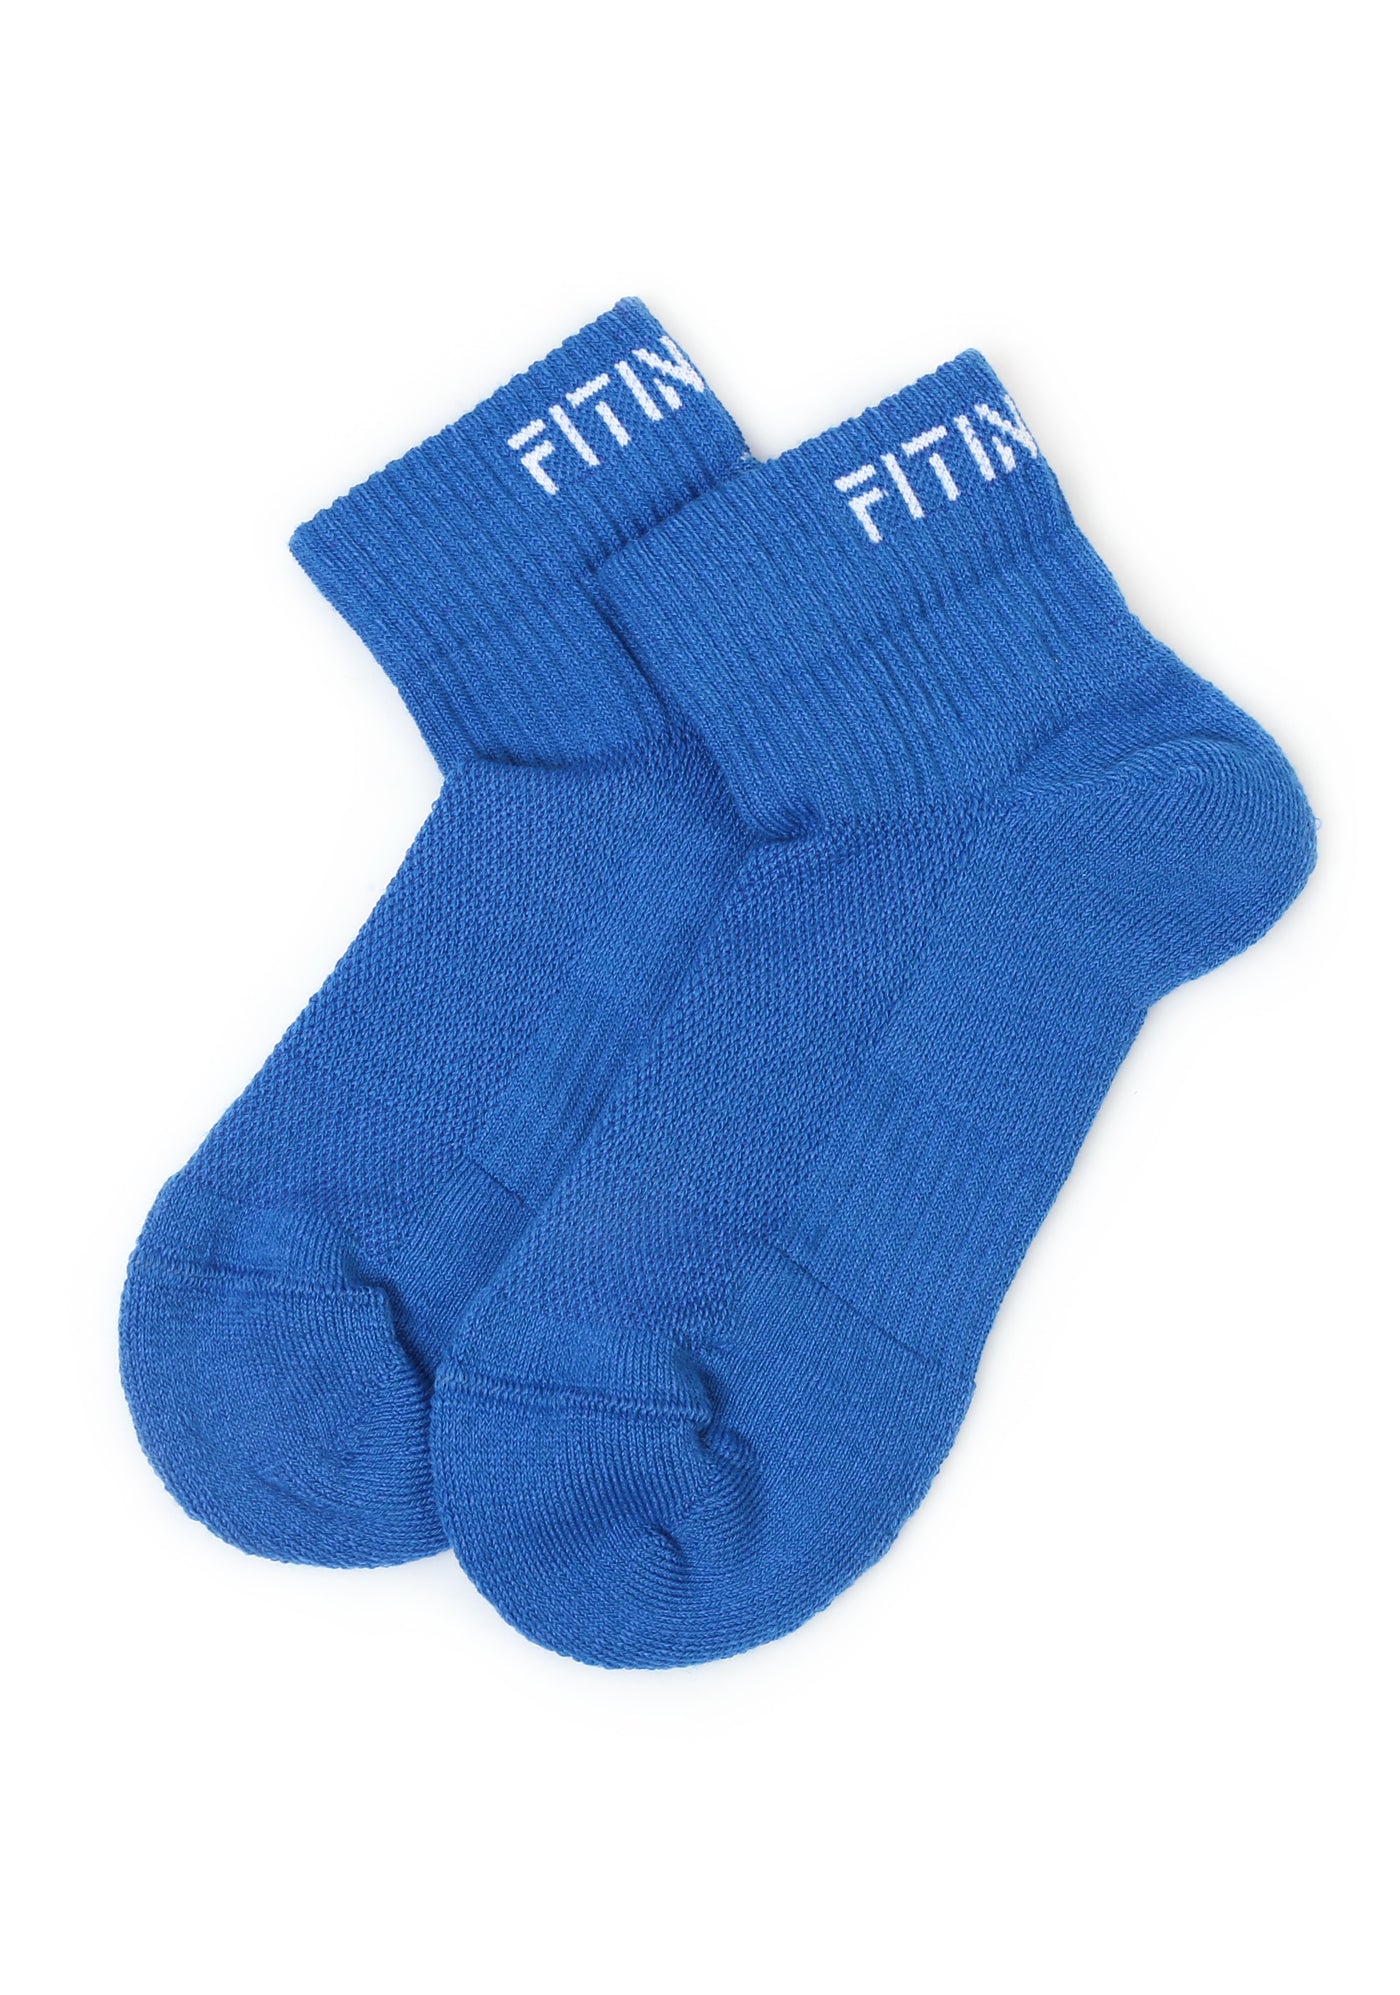 Premium Performance Quarter Trainer Sports Socks 2pk (Blue-Pink)